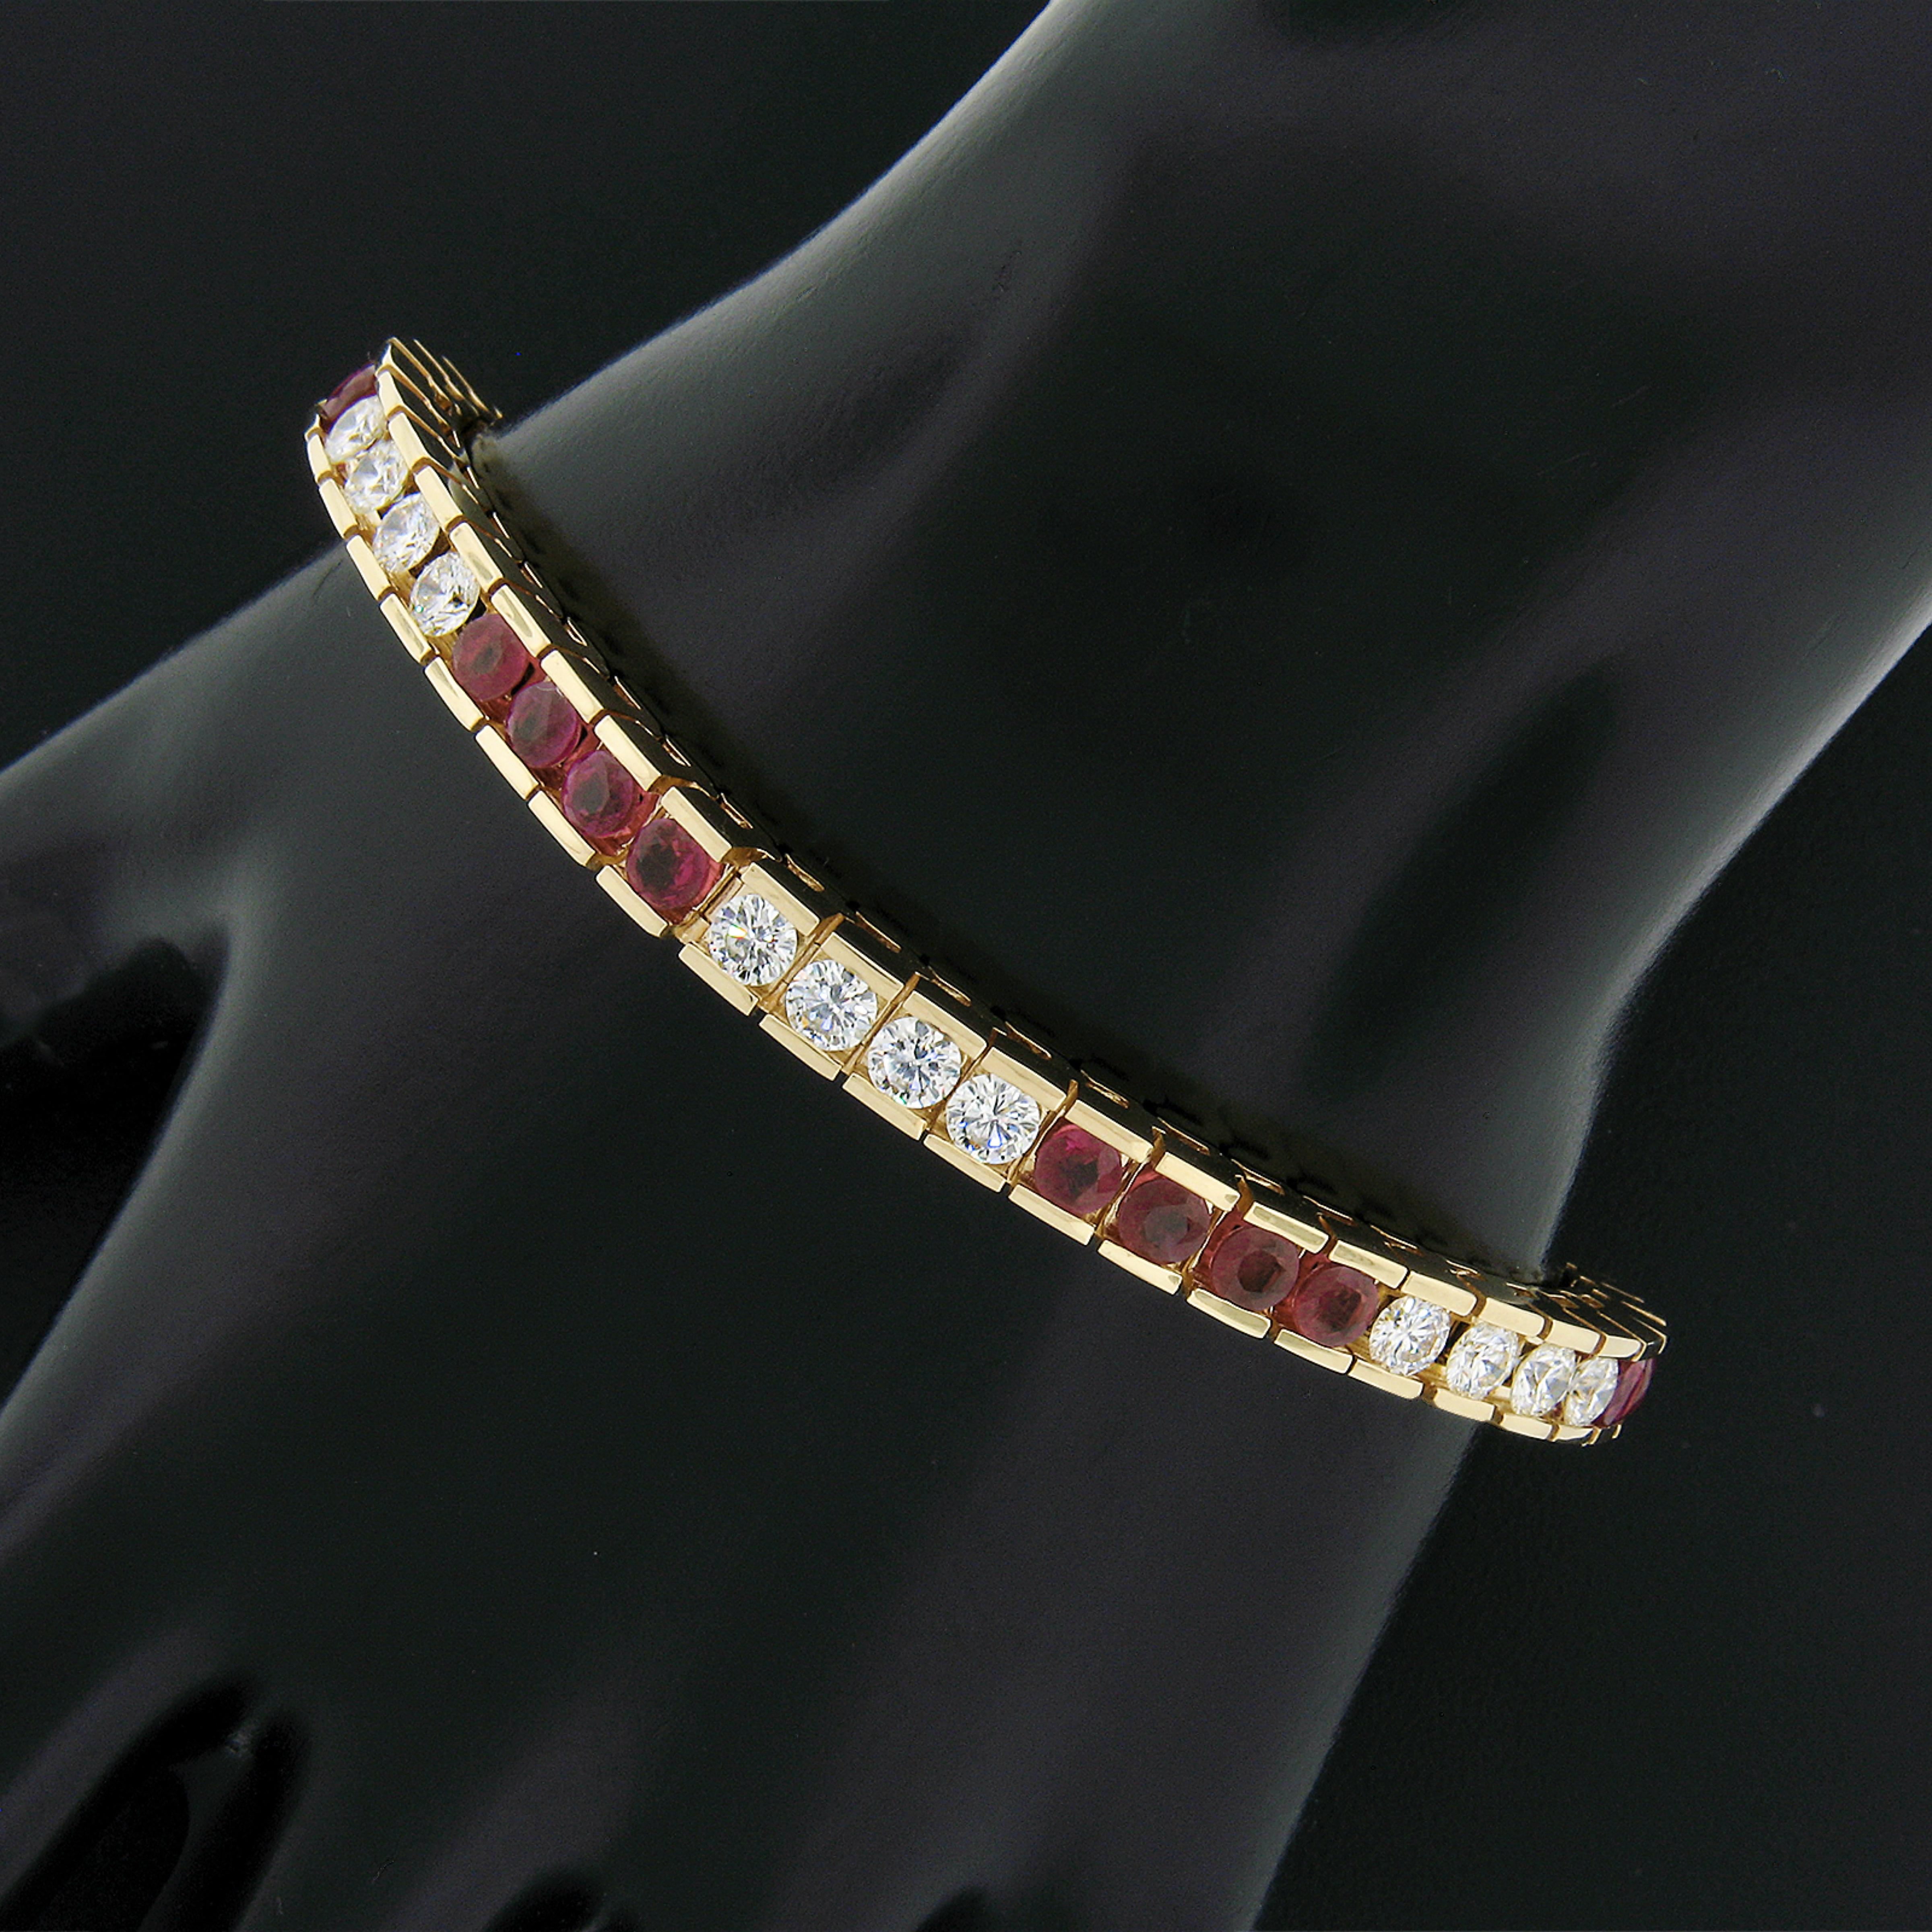 9.25ct 18ct white gold tennis bracelet guaranteed g/h colour si purity natural diamonds